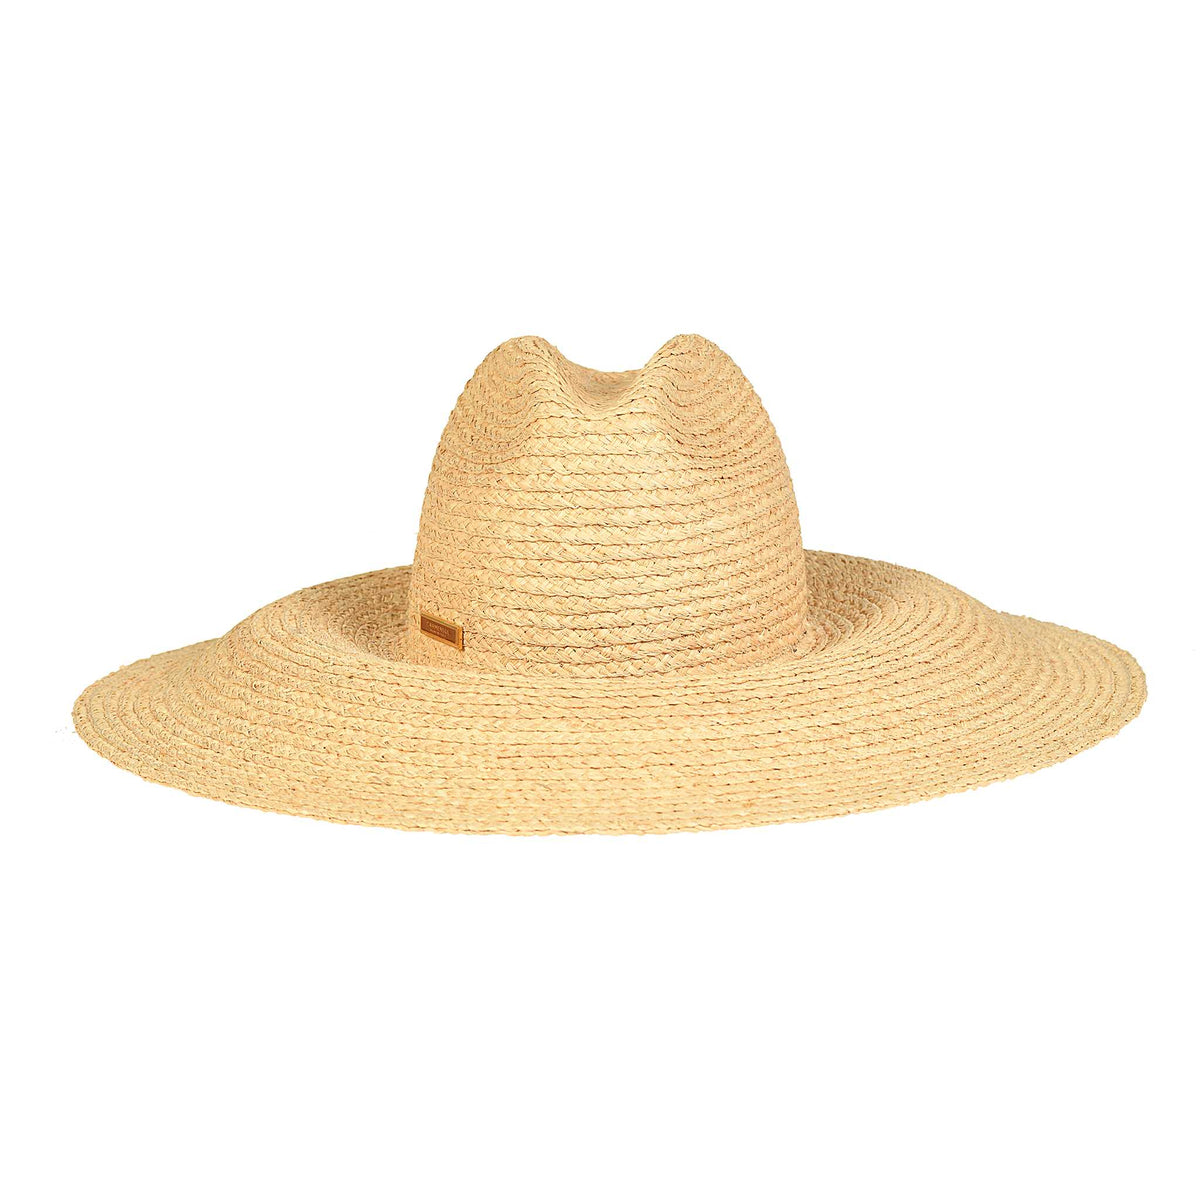 Oversized Carmen Sol Frances raffia bucket hat in color nude